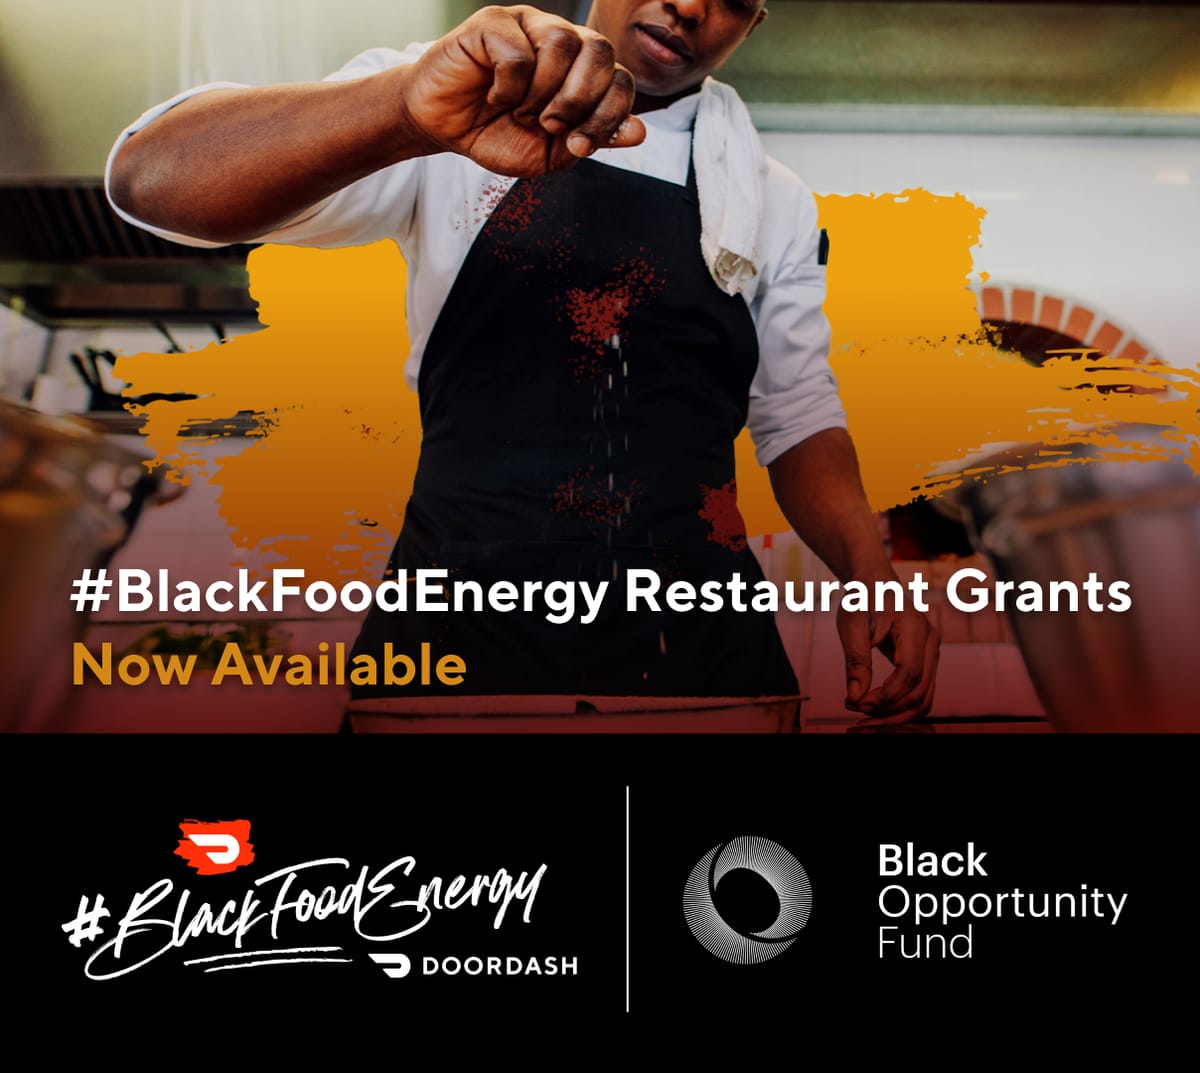 Black Opportunity Fund, DoorDash team up to offer $10K grants to Black-owned restaurants